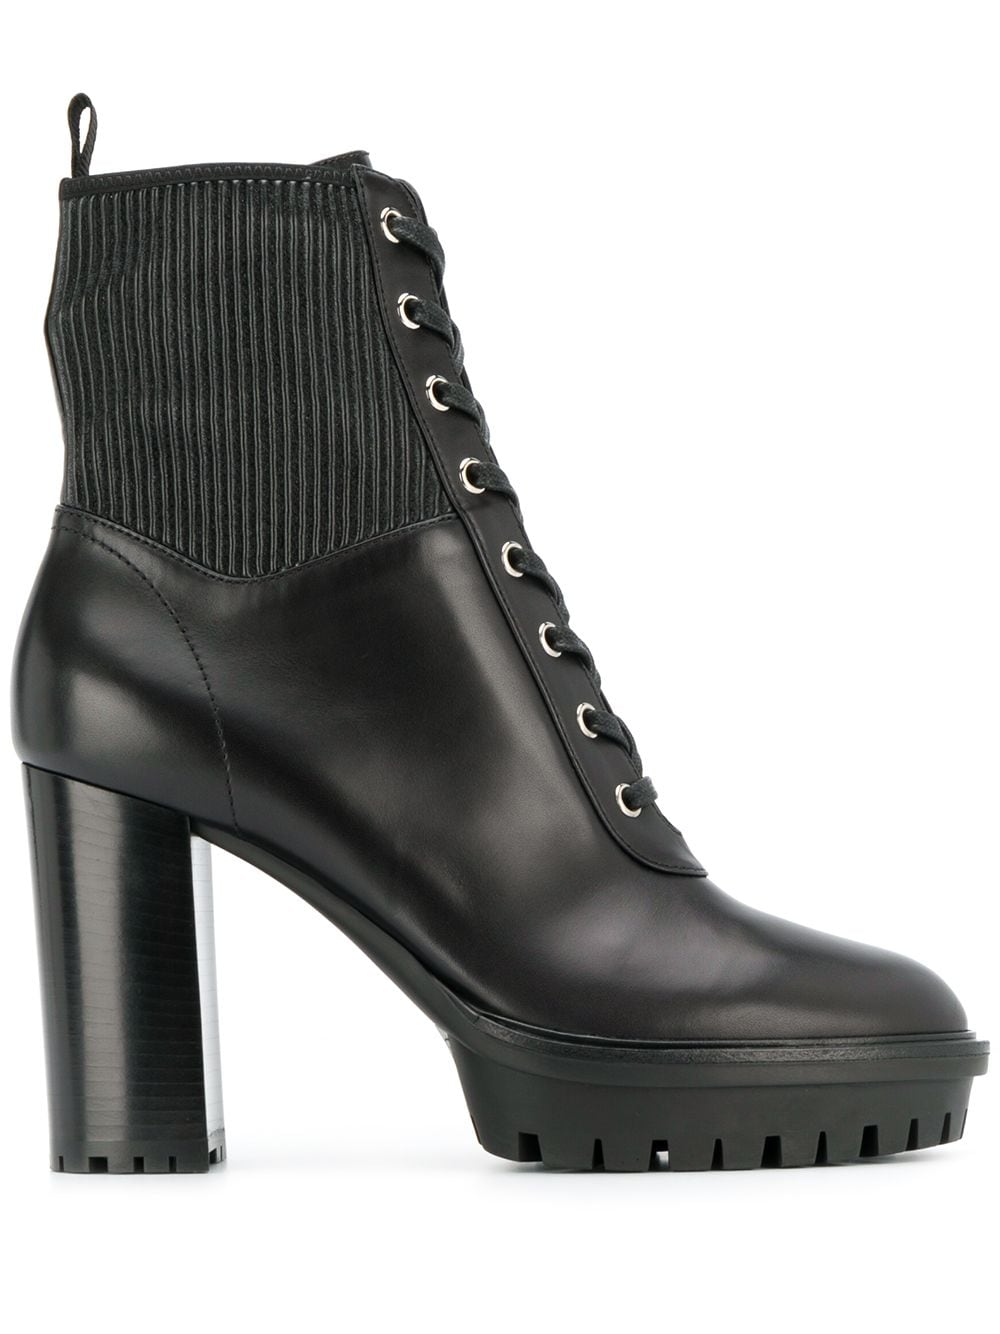 Martis Leather Boots дамски обувки Gianvito Rossi 846020350_36